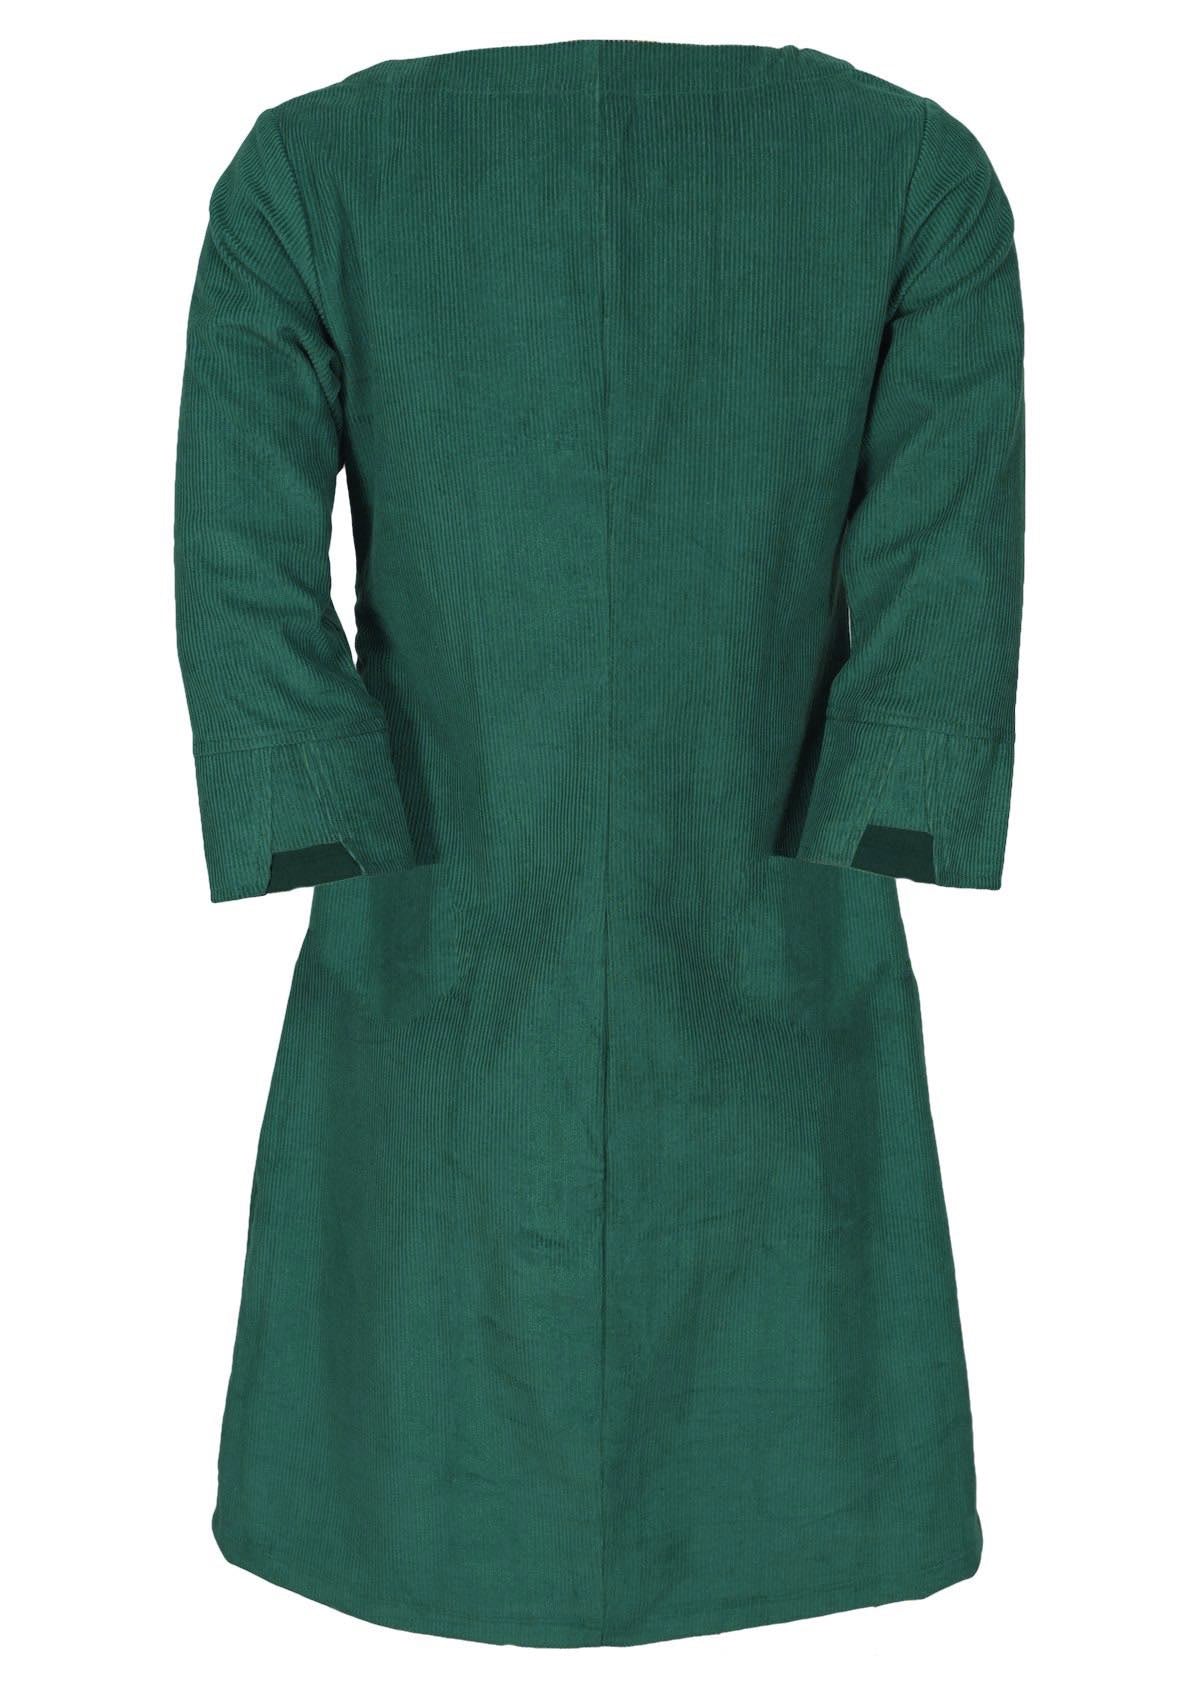 Green corduroy dress features a-line shape. 